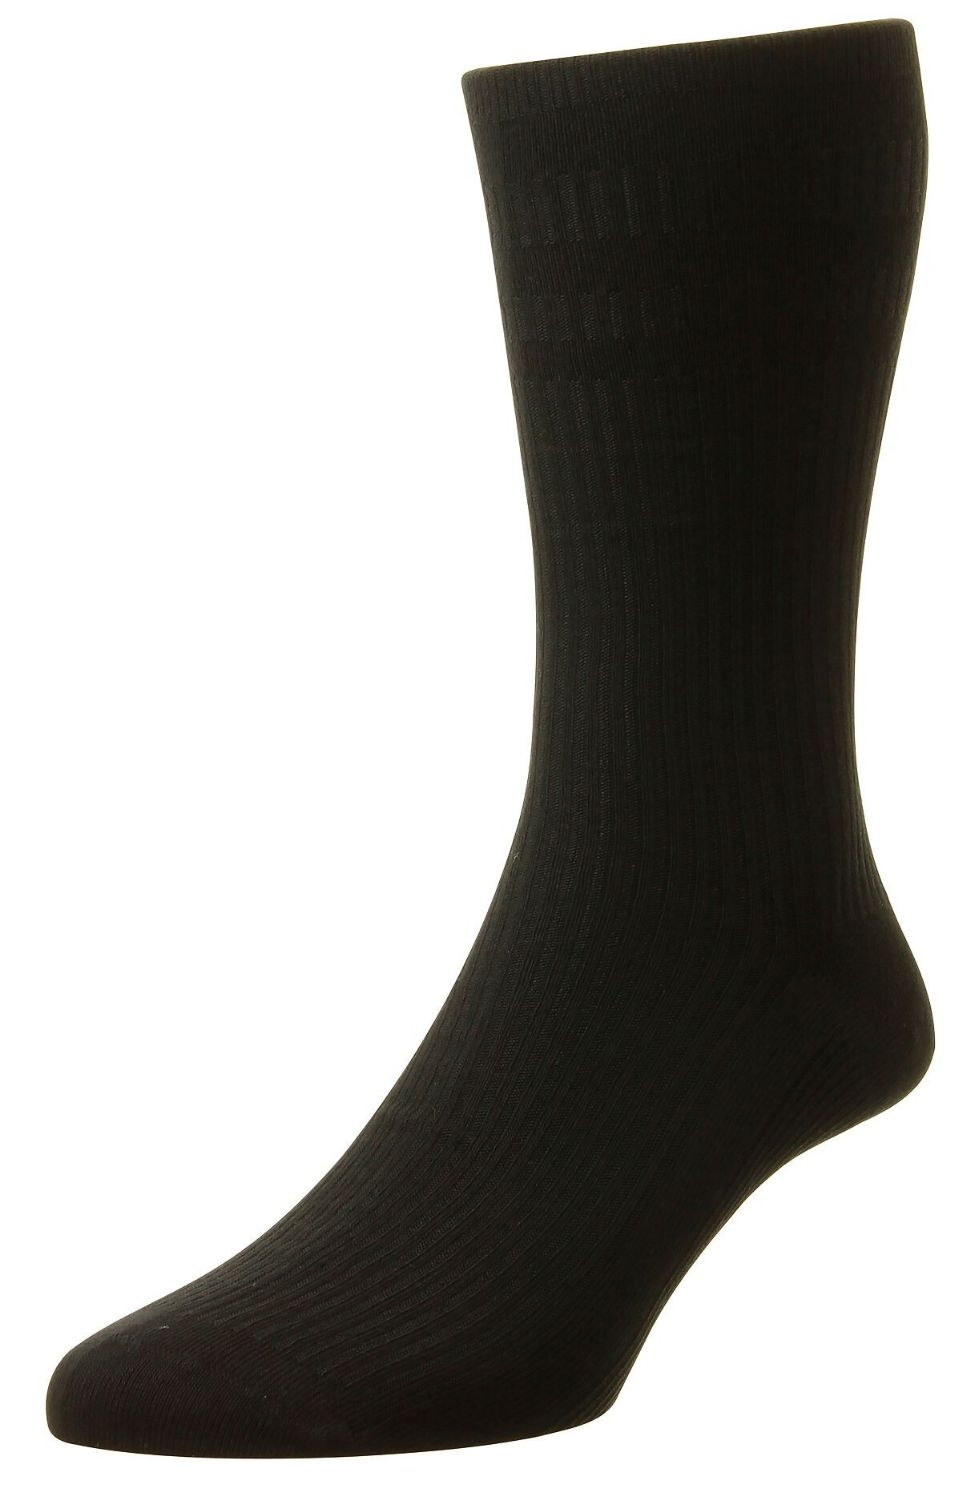 HJ Socks Softop HJ91 Black size 11-13